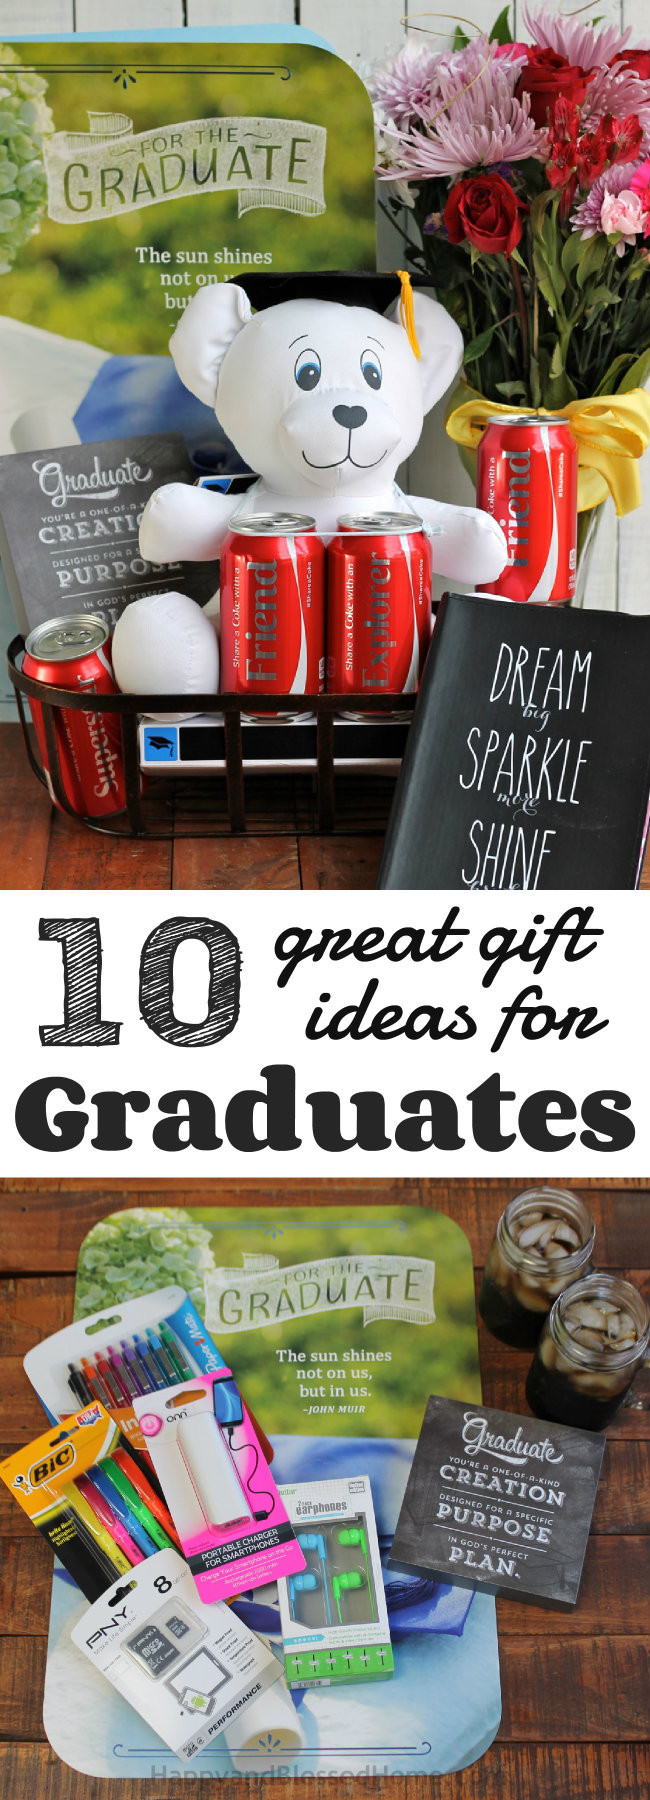 Great Graduation Gift Ideas
 10 Great Gift Ideas for Graduates